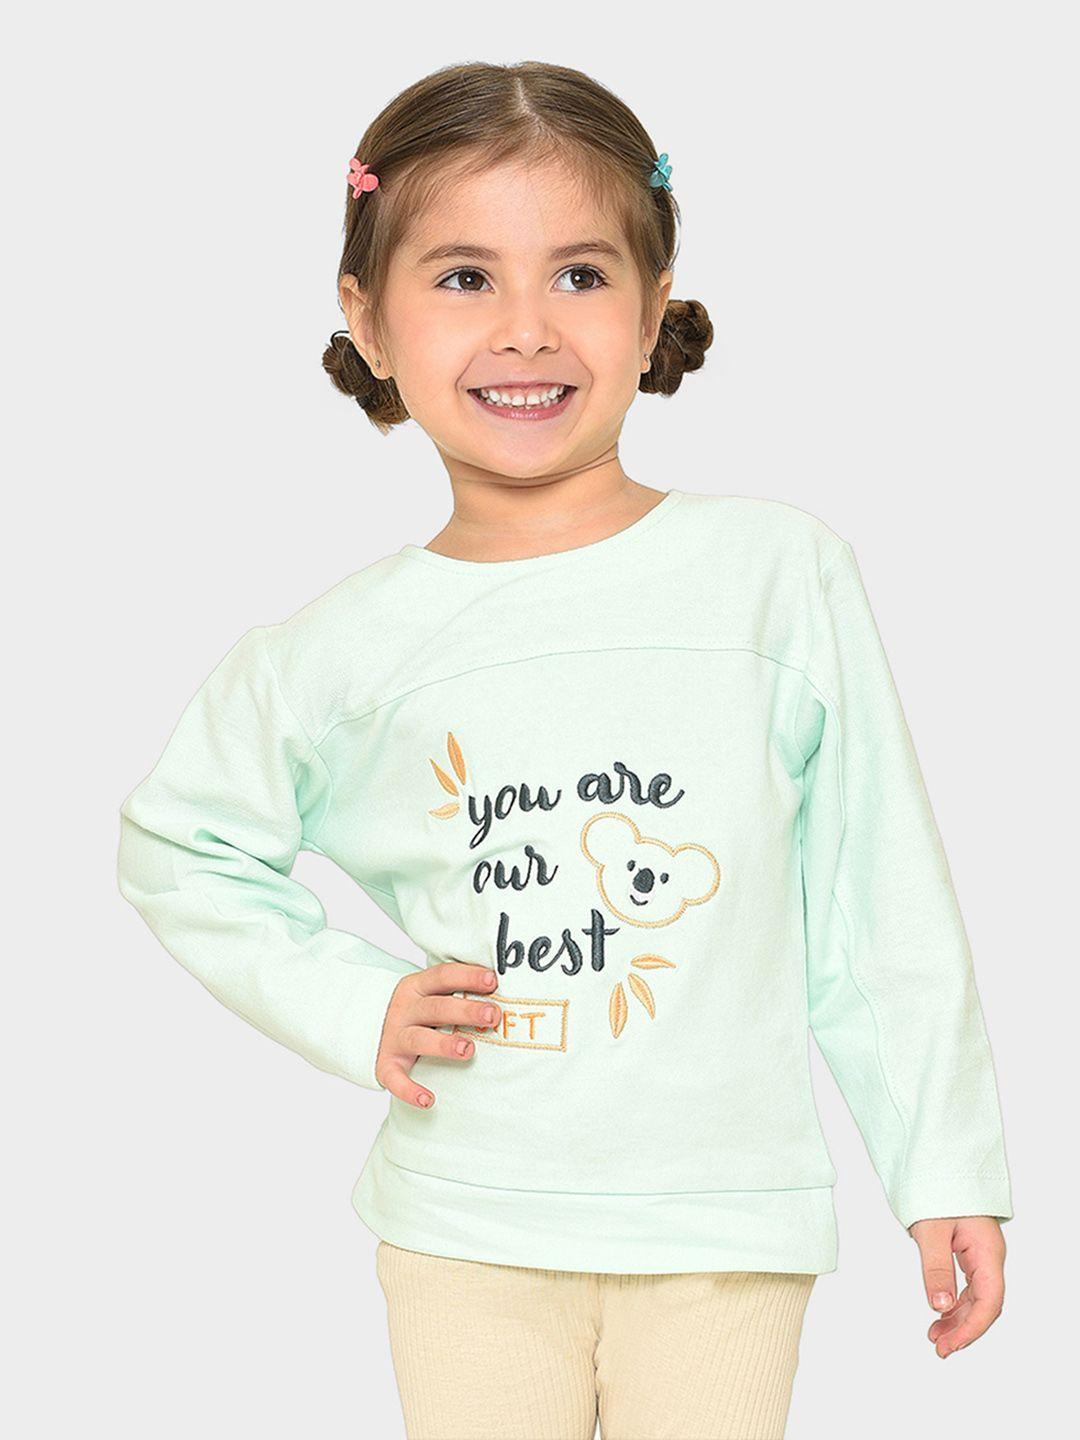 miarcus kids typography embroidered cotton pullover sweatshirt